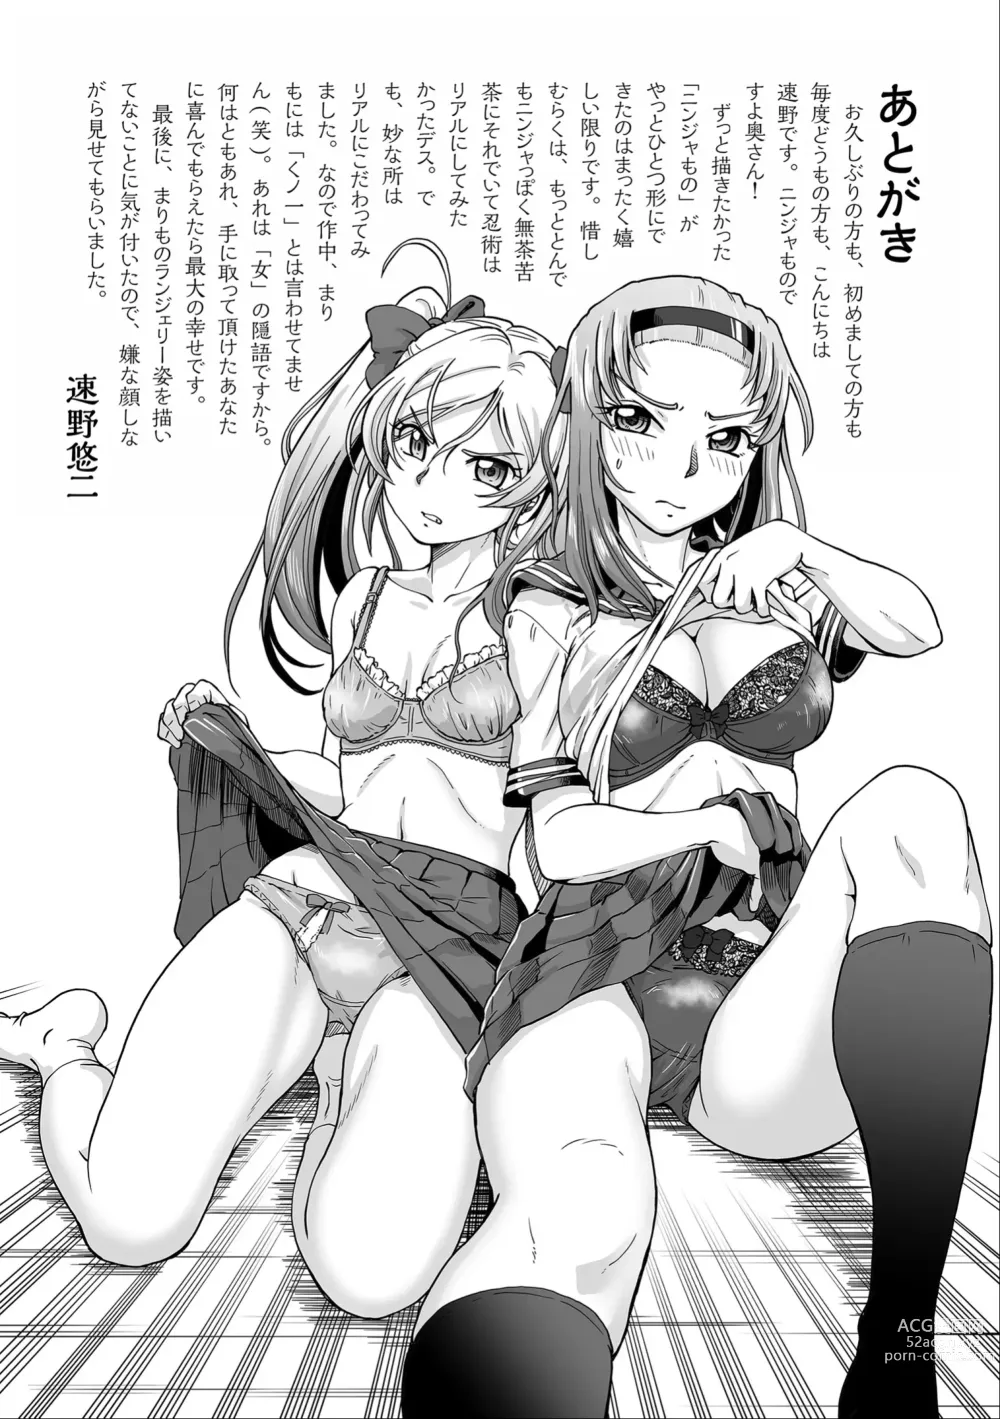 Page 192 of manga JK Ninja Marimo Ninpouchou